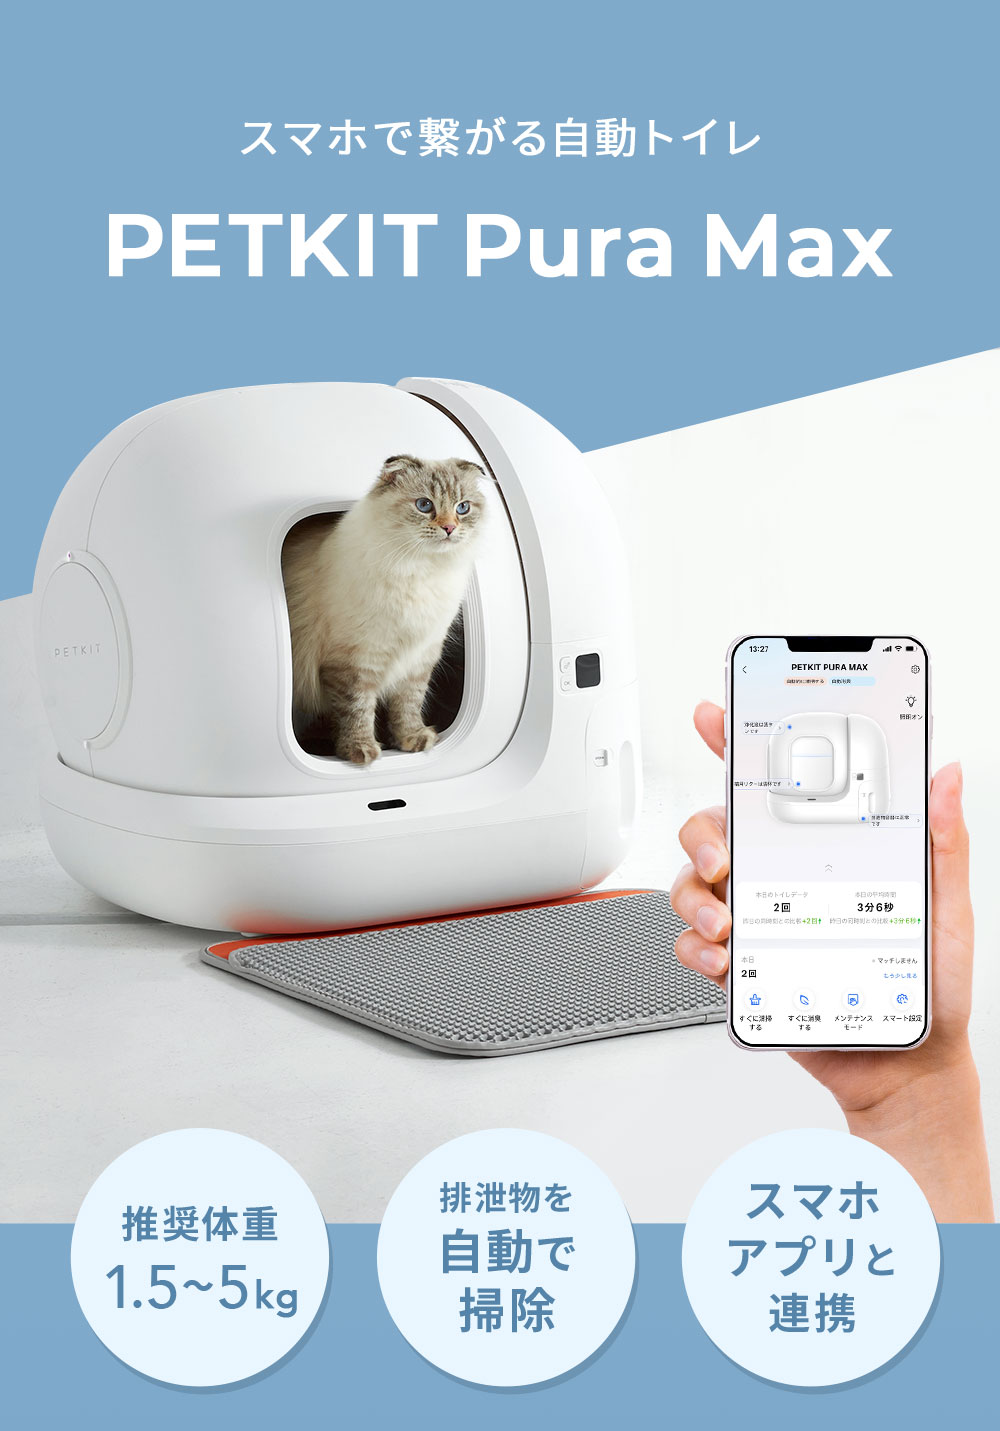 PETKIT 猫 トイレ 自動トイレ スマホ管理 センサー付き 飛散防止 自動清掃 定期清掃 掃除簡単 お留守番 専用APP IOS Android対